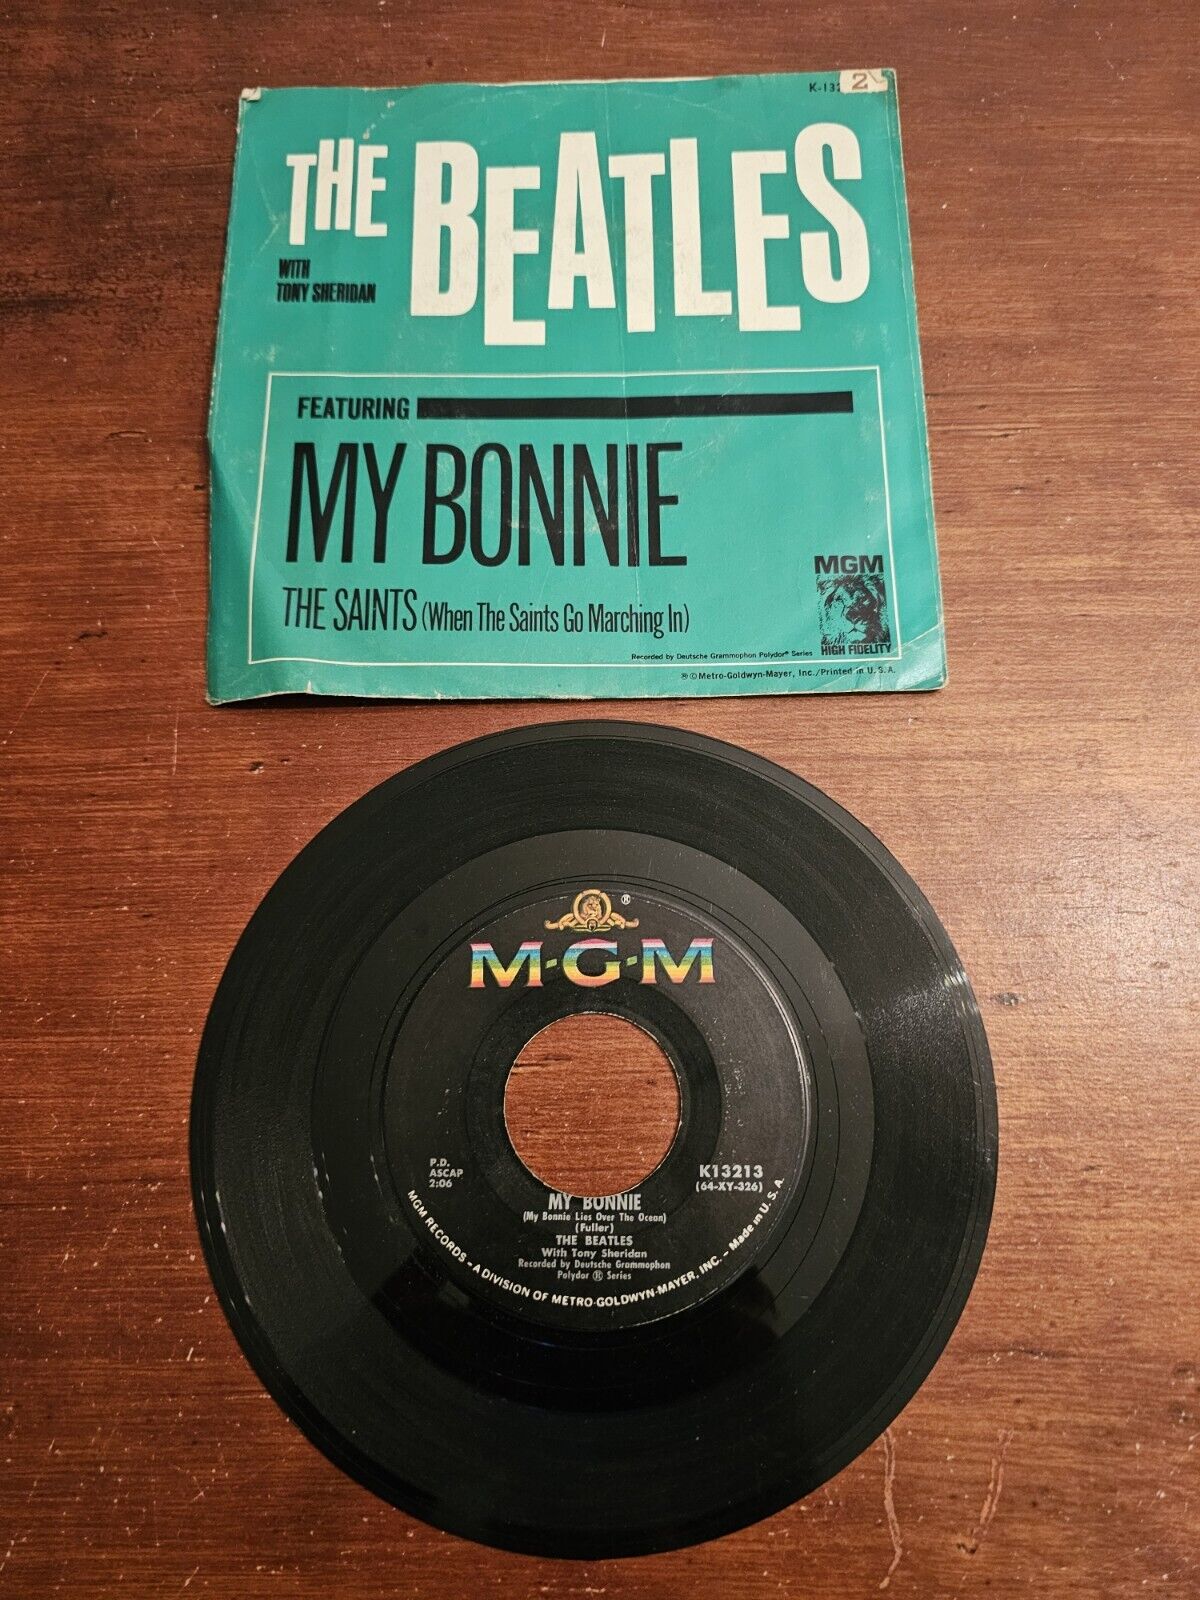 THE BEATLES "My Bonnie" 45 MGM K-13213 Rock & Roll 1964 Tony Sheridan 7" Record 